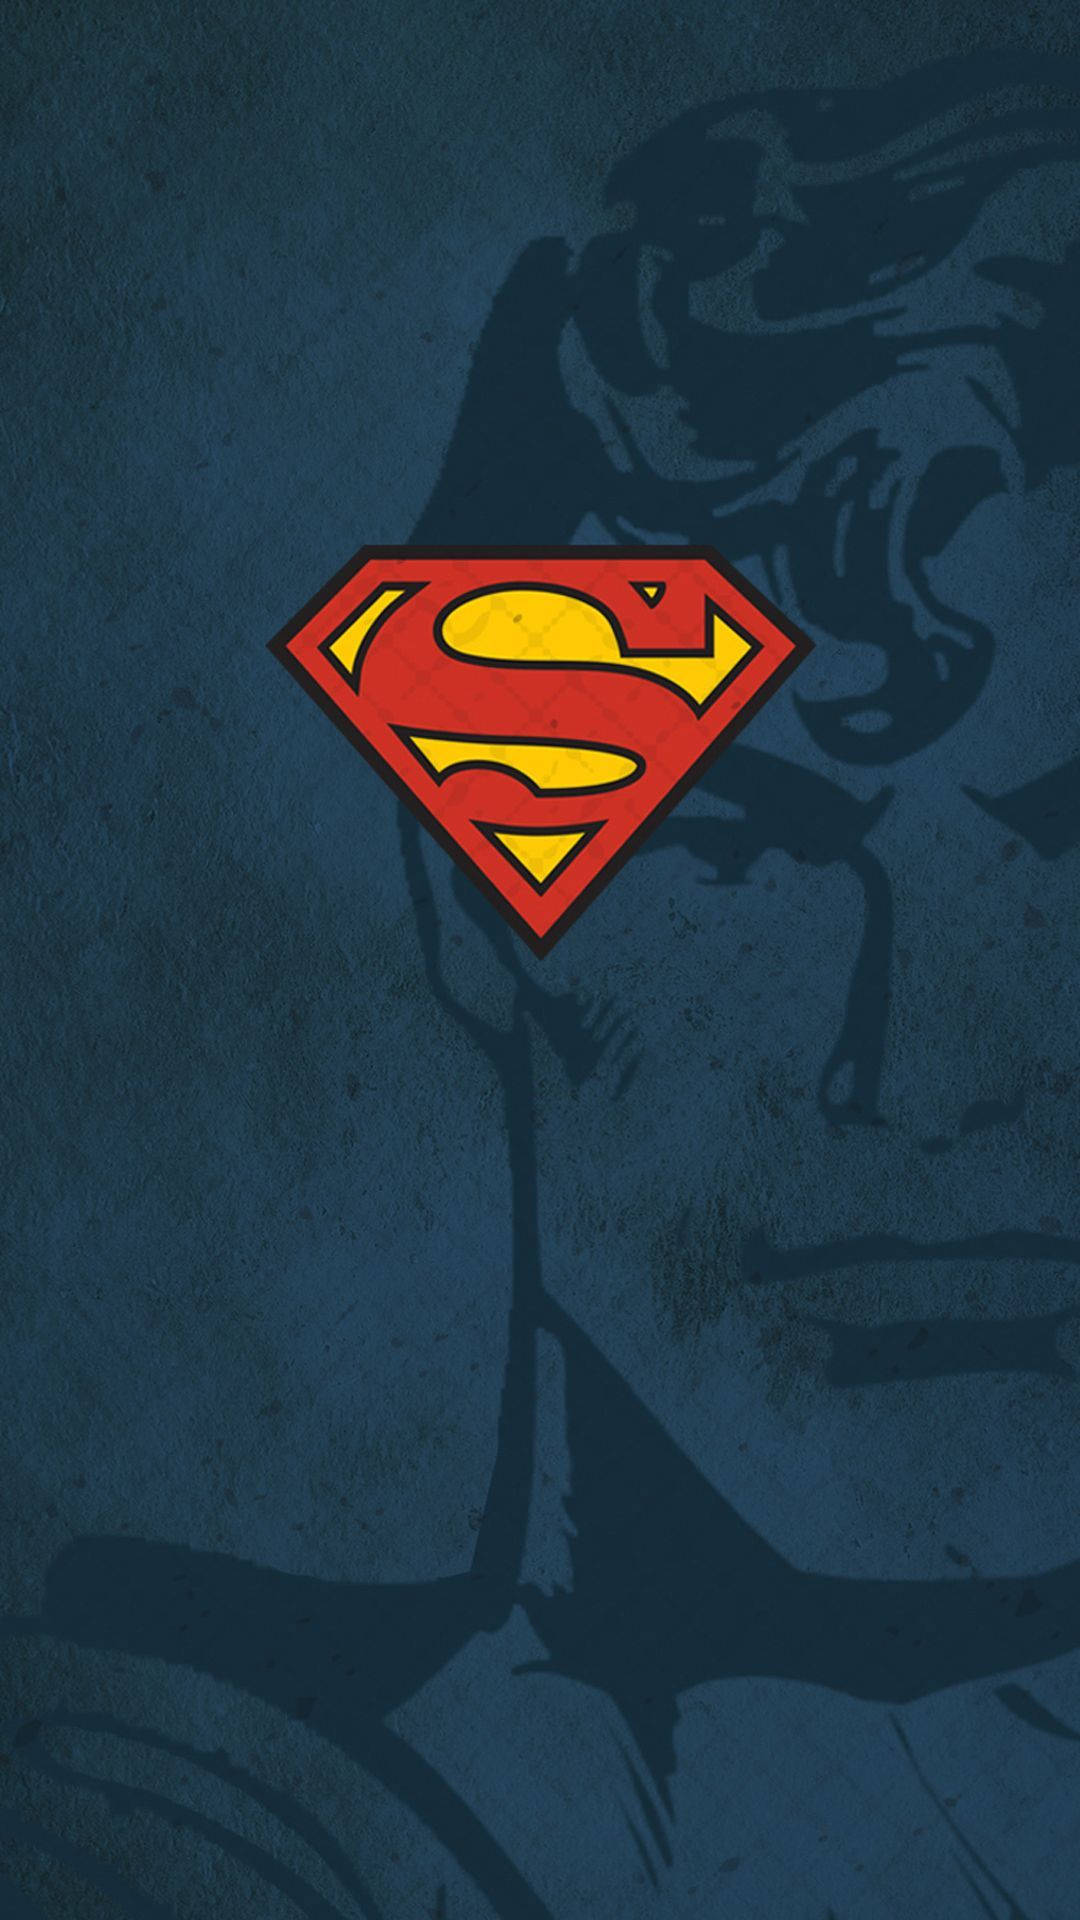 Free Superman Symbol Iphone Wallpaper Downloads, [100+] Superman Symbol  Iphone Wallpapers for FREE 